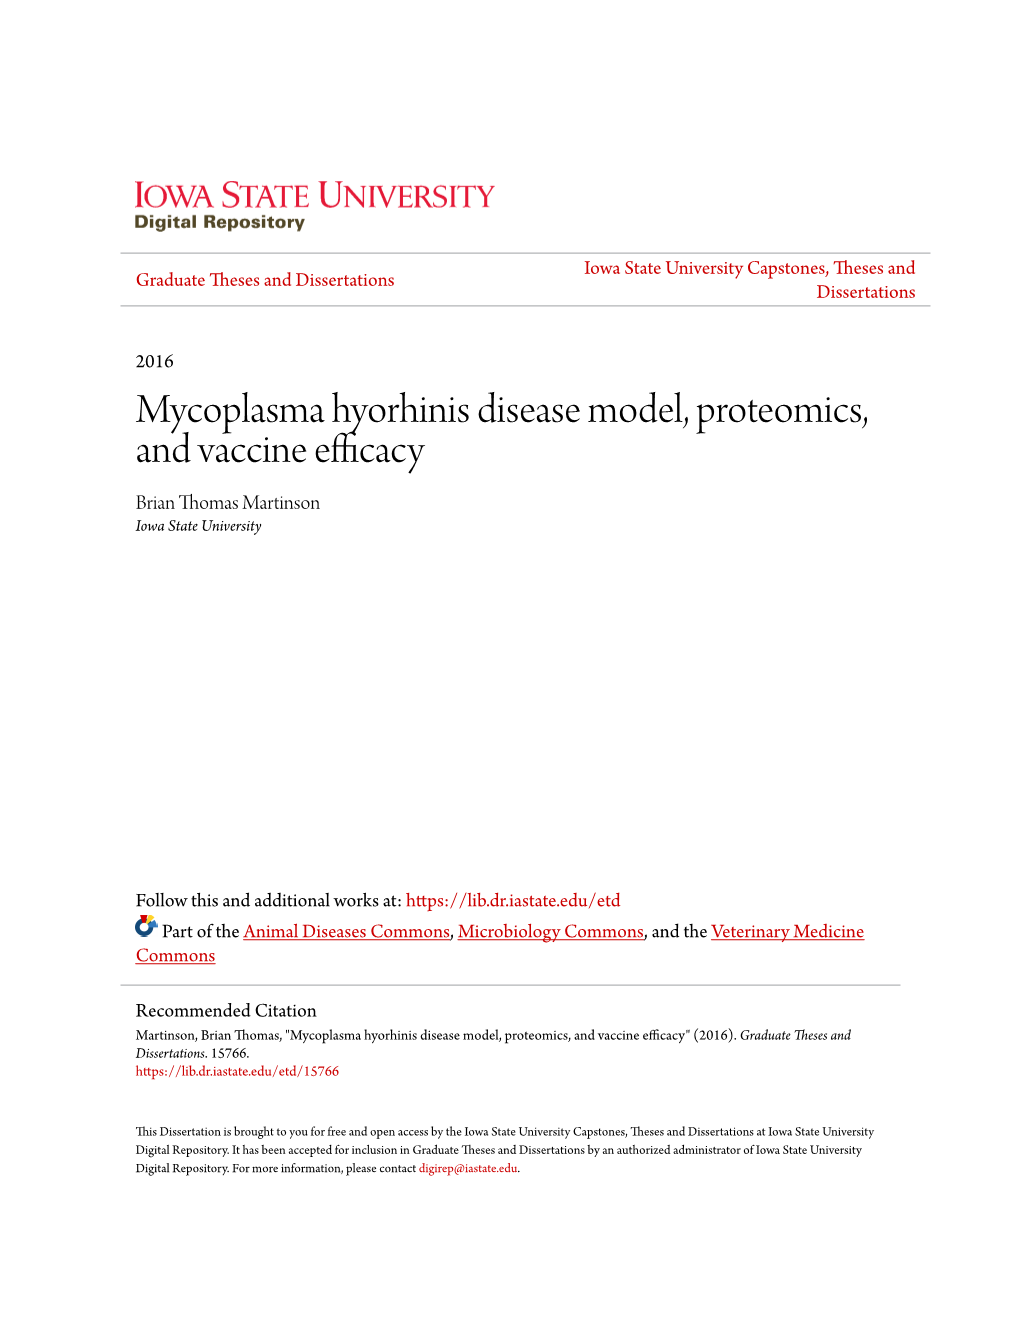 Mycoplasma Hyorhinis Disease Model, Proteomics, and Vaccine Efficacy Brian Thomas Martinson Iowa State University